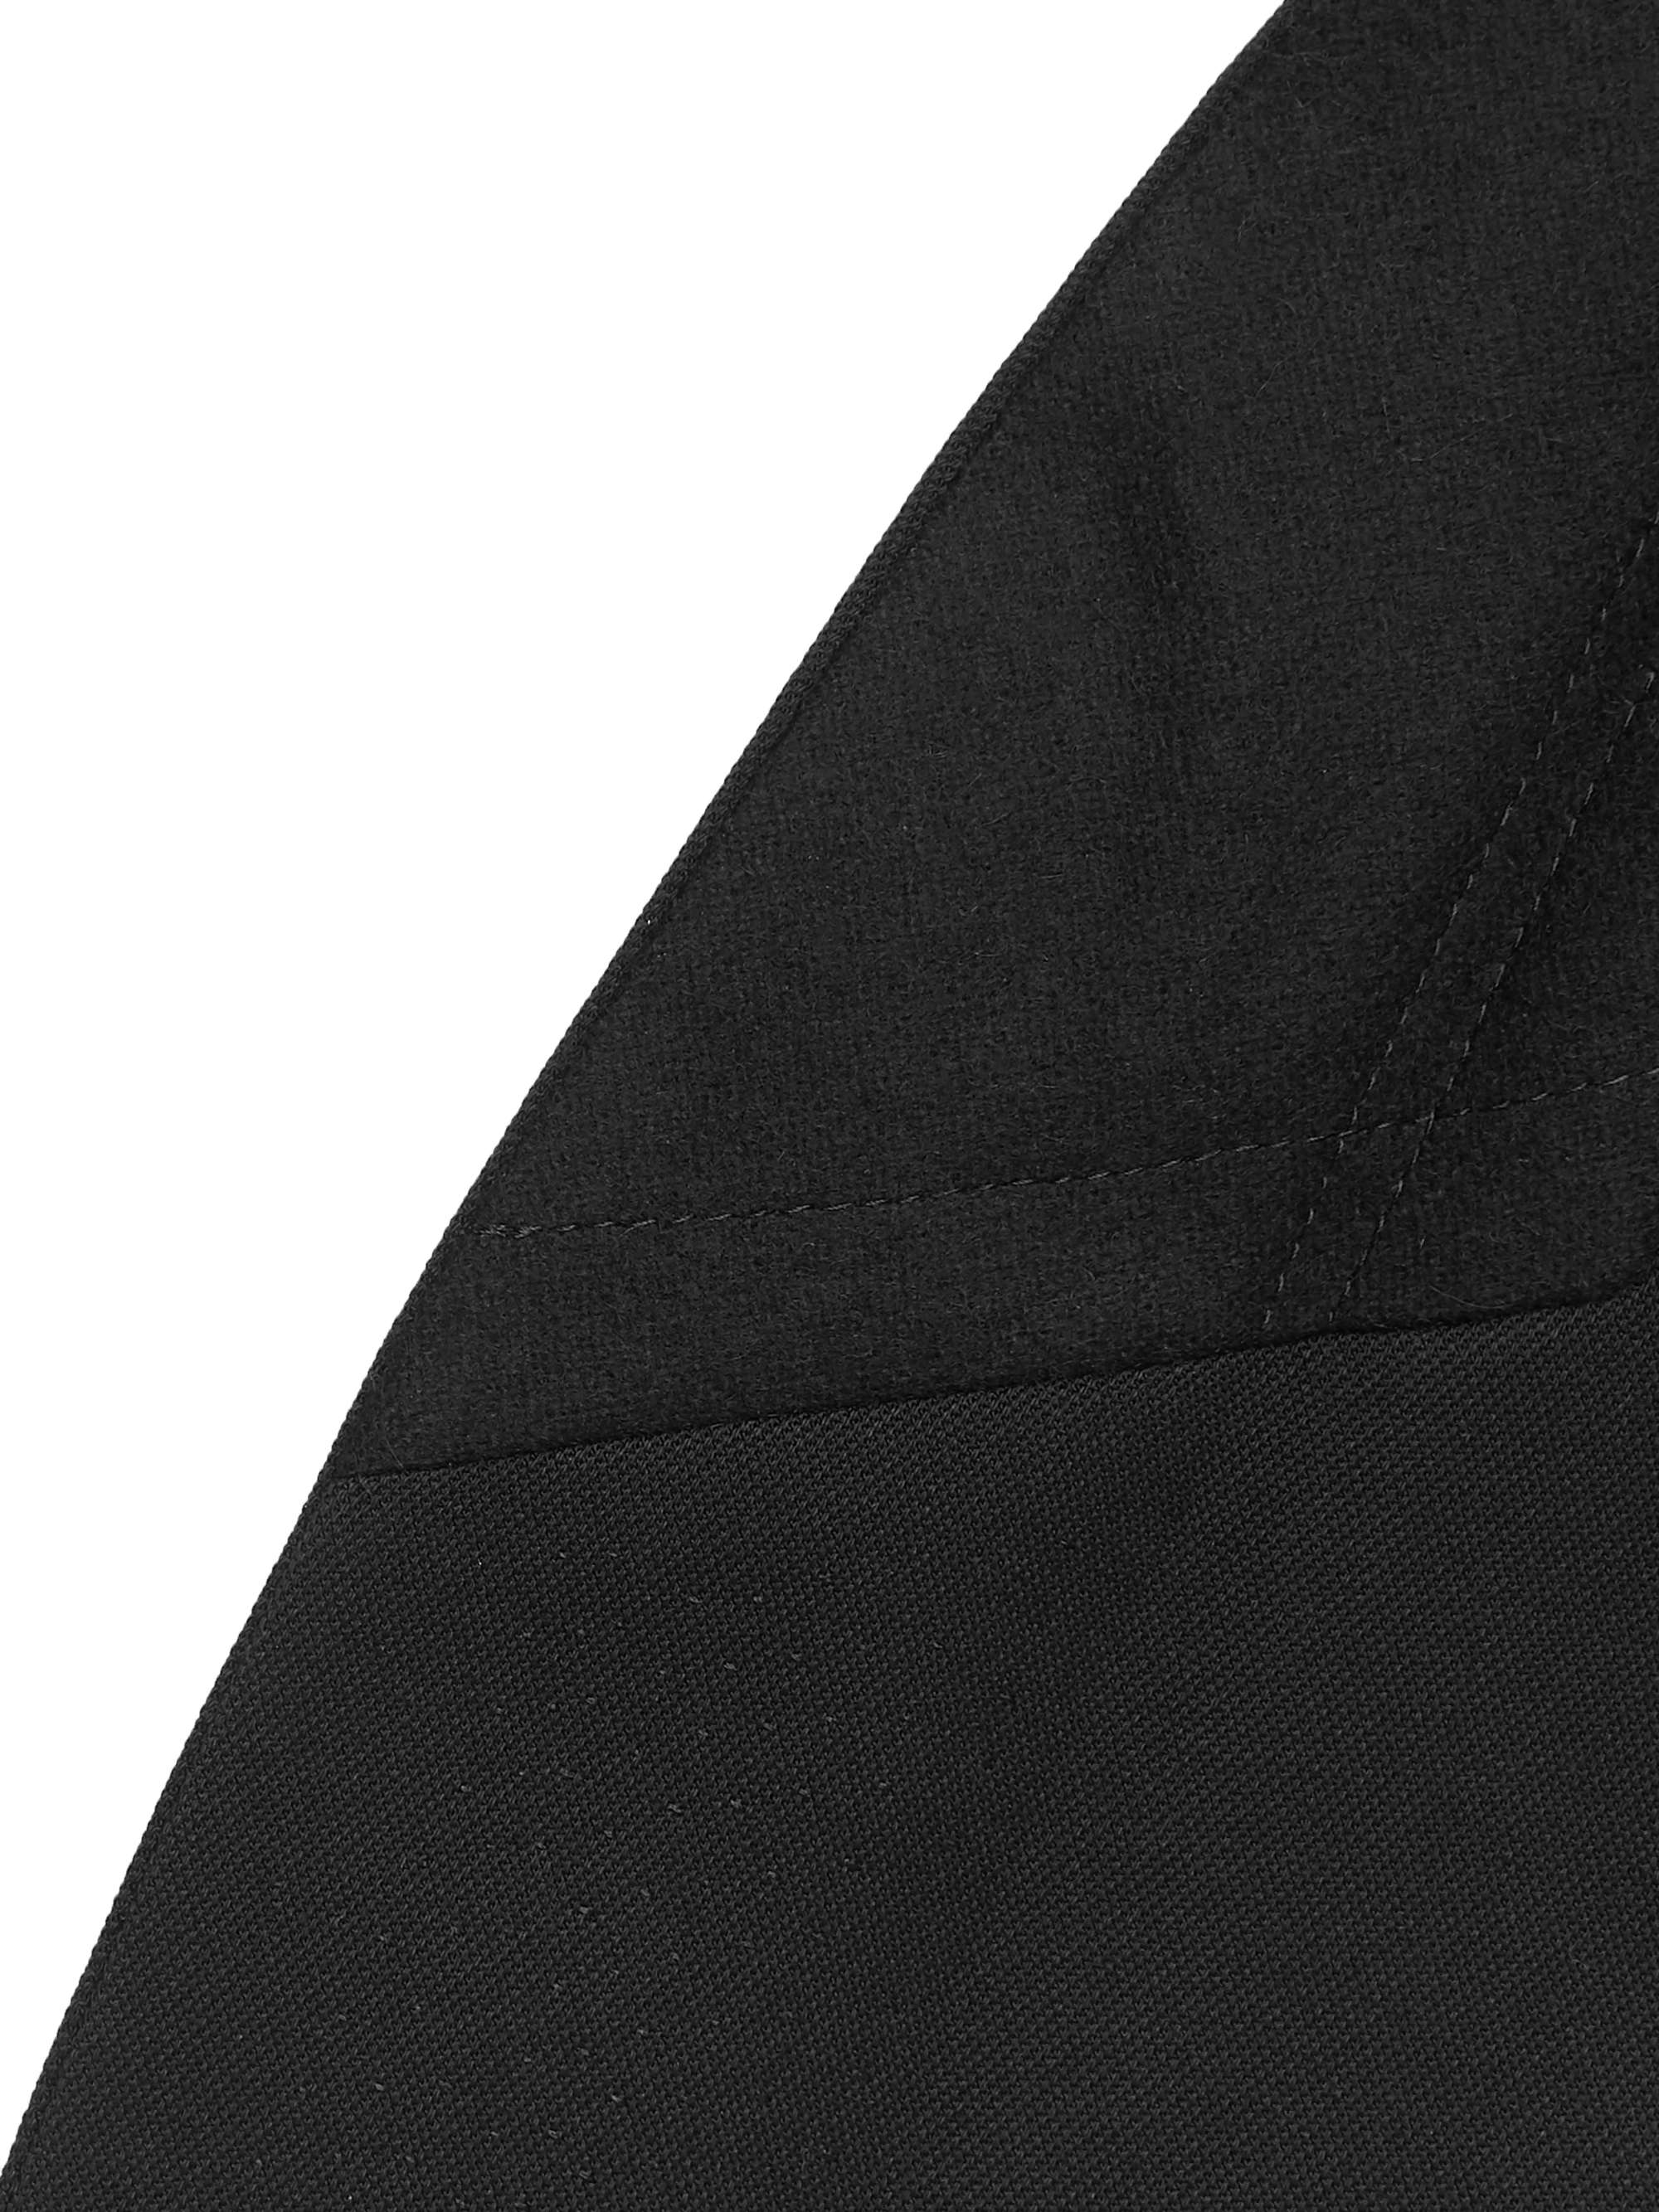 THE ROW Archer Black Slim-Fit Grain de Poudre Virgin Wool Tuxedo Jacket